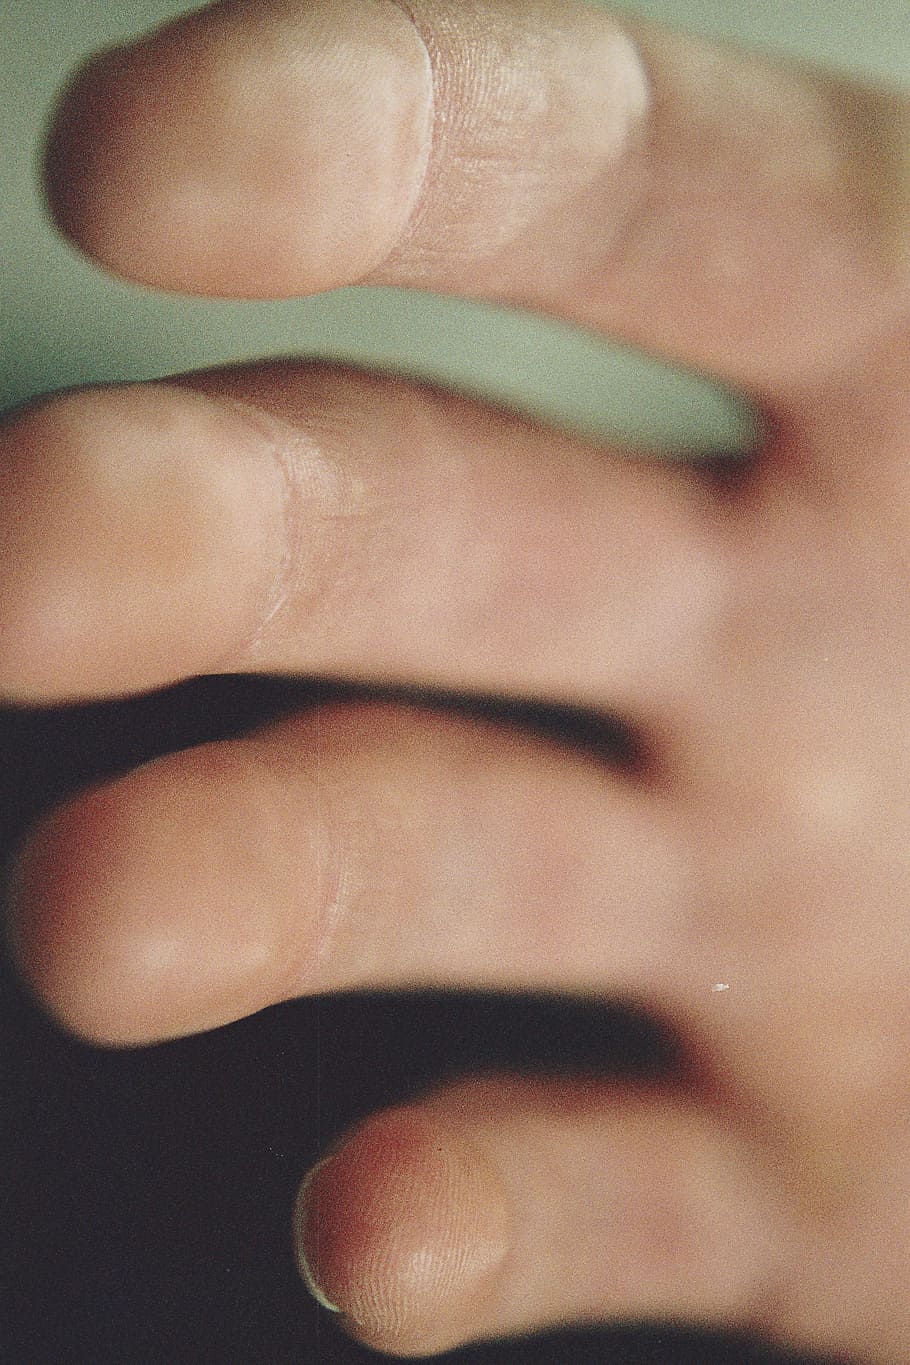 hand, skin, close-up, fingers, grunge, grip, grasp, smudge, human body part, body part